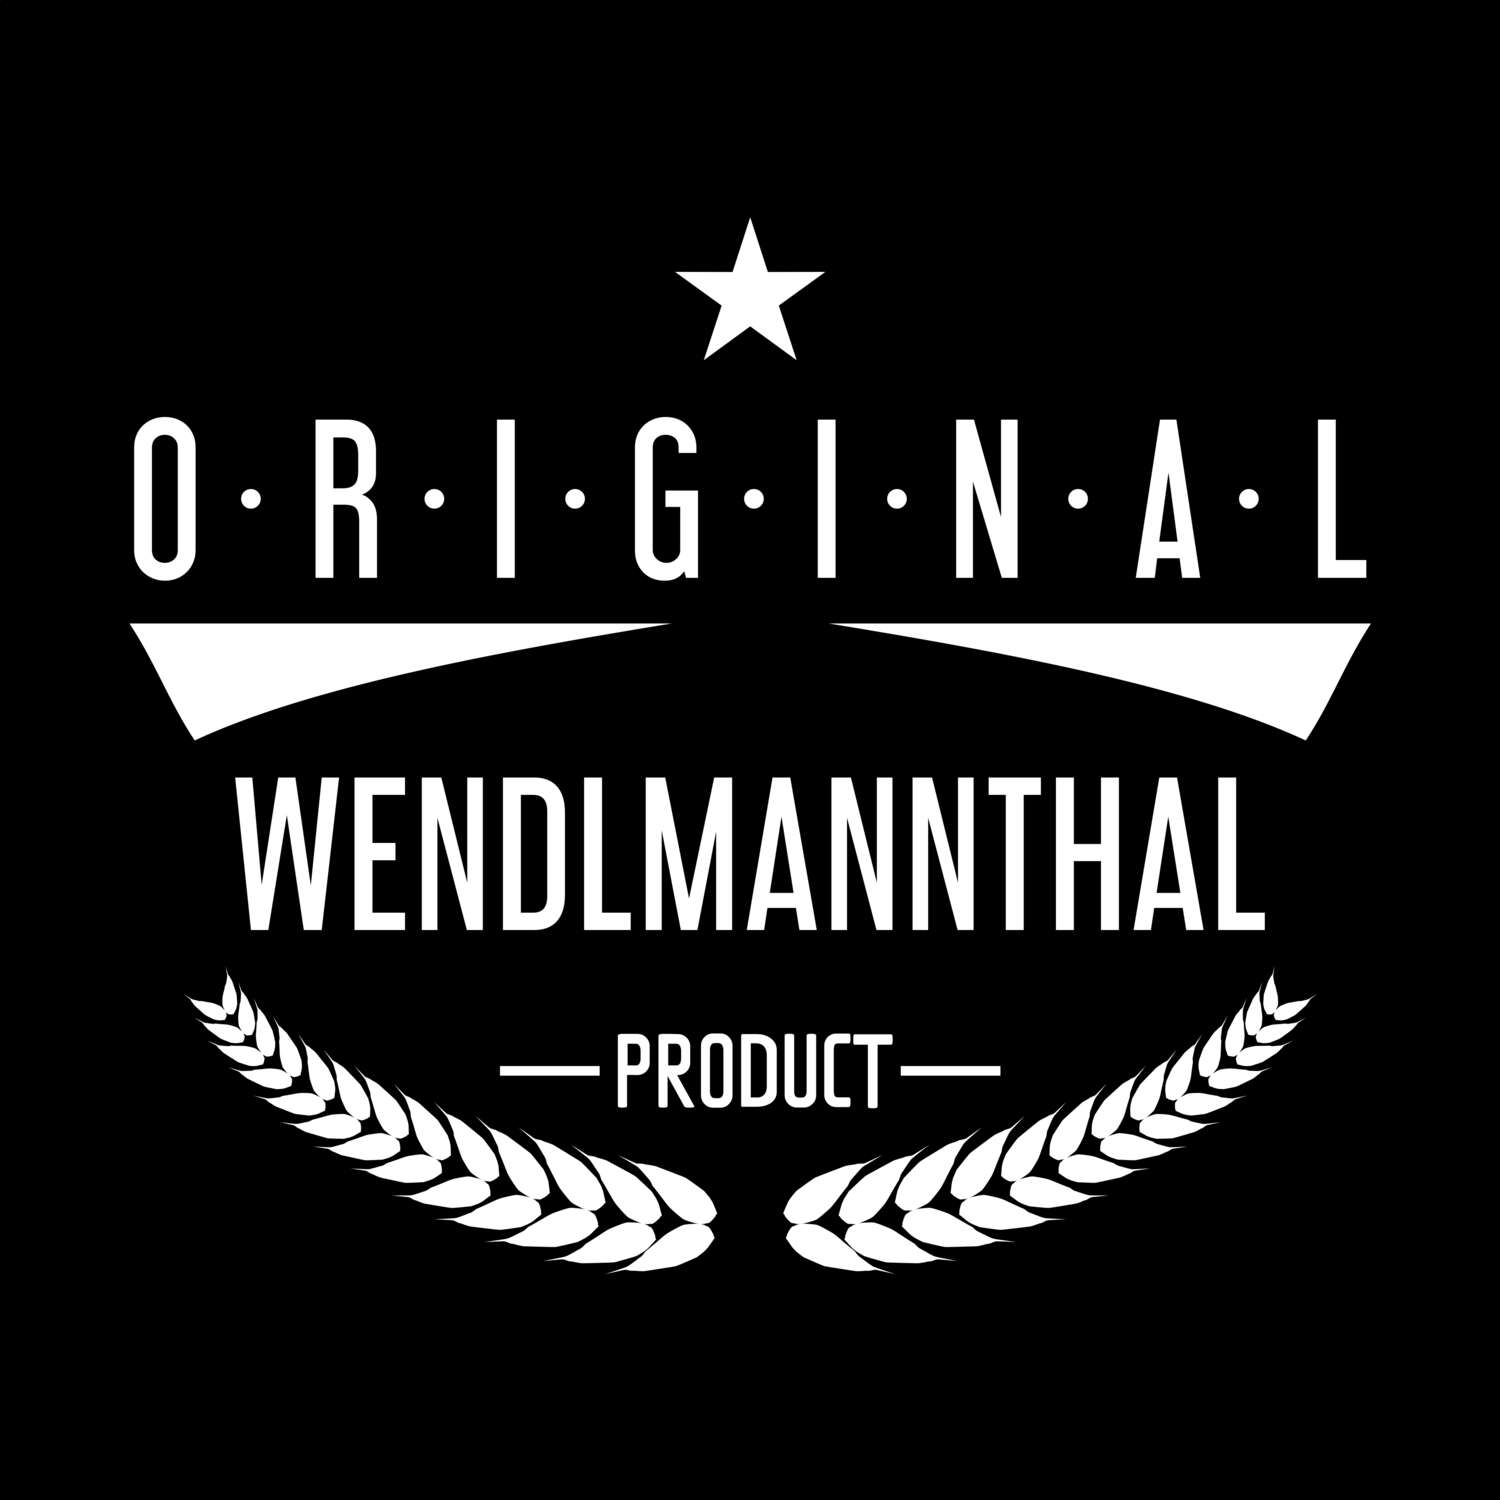 Wendlmannthal T-Shirt »Original Product«